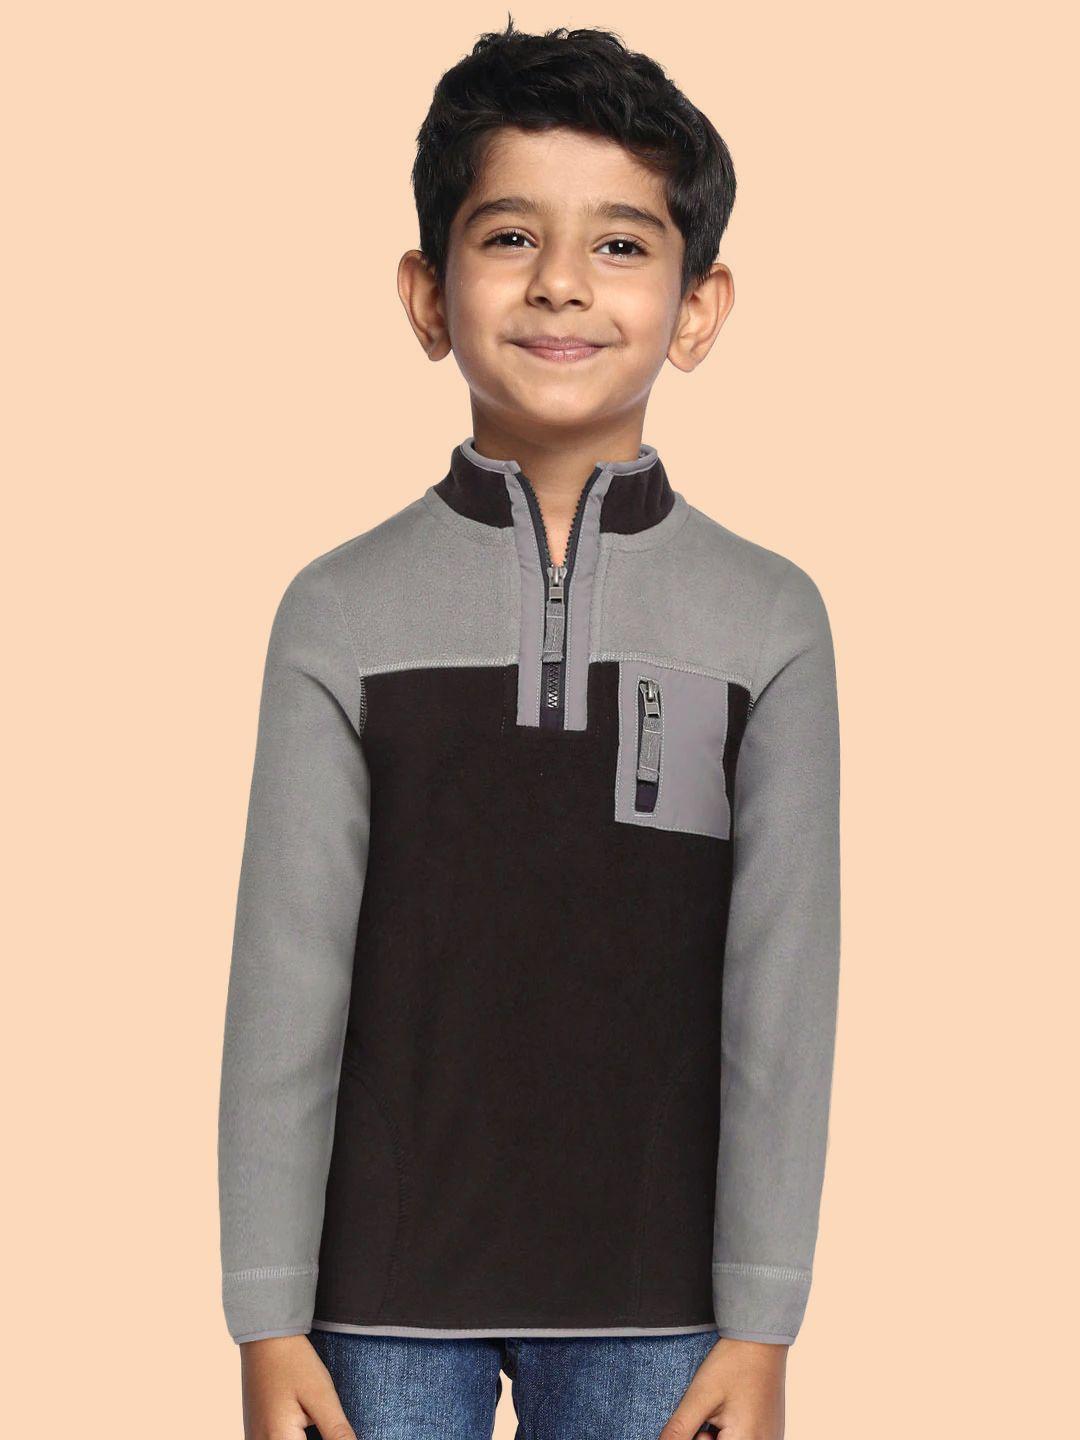 marks & spencer boys black & grey colourblocked half zipper sweatshirt